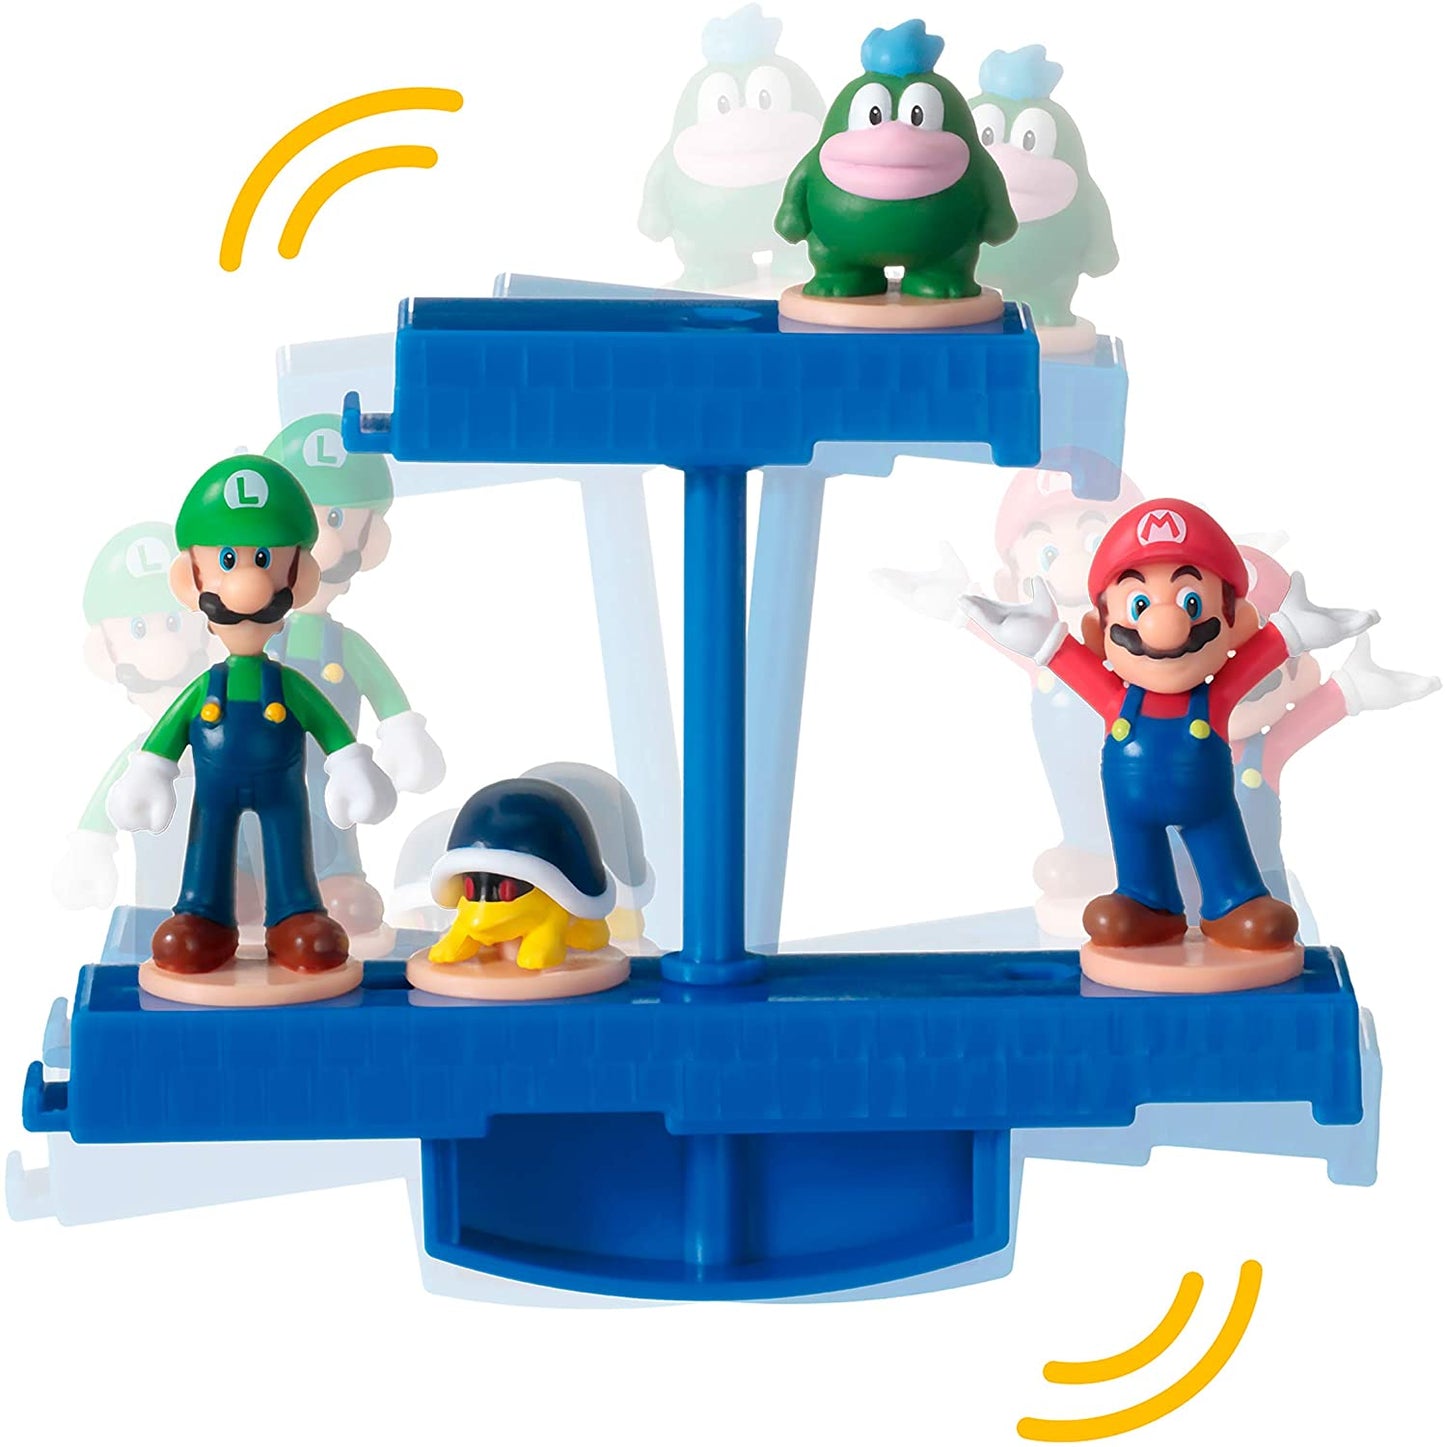 Game - Super Mario Balancing Game: Underground Stage